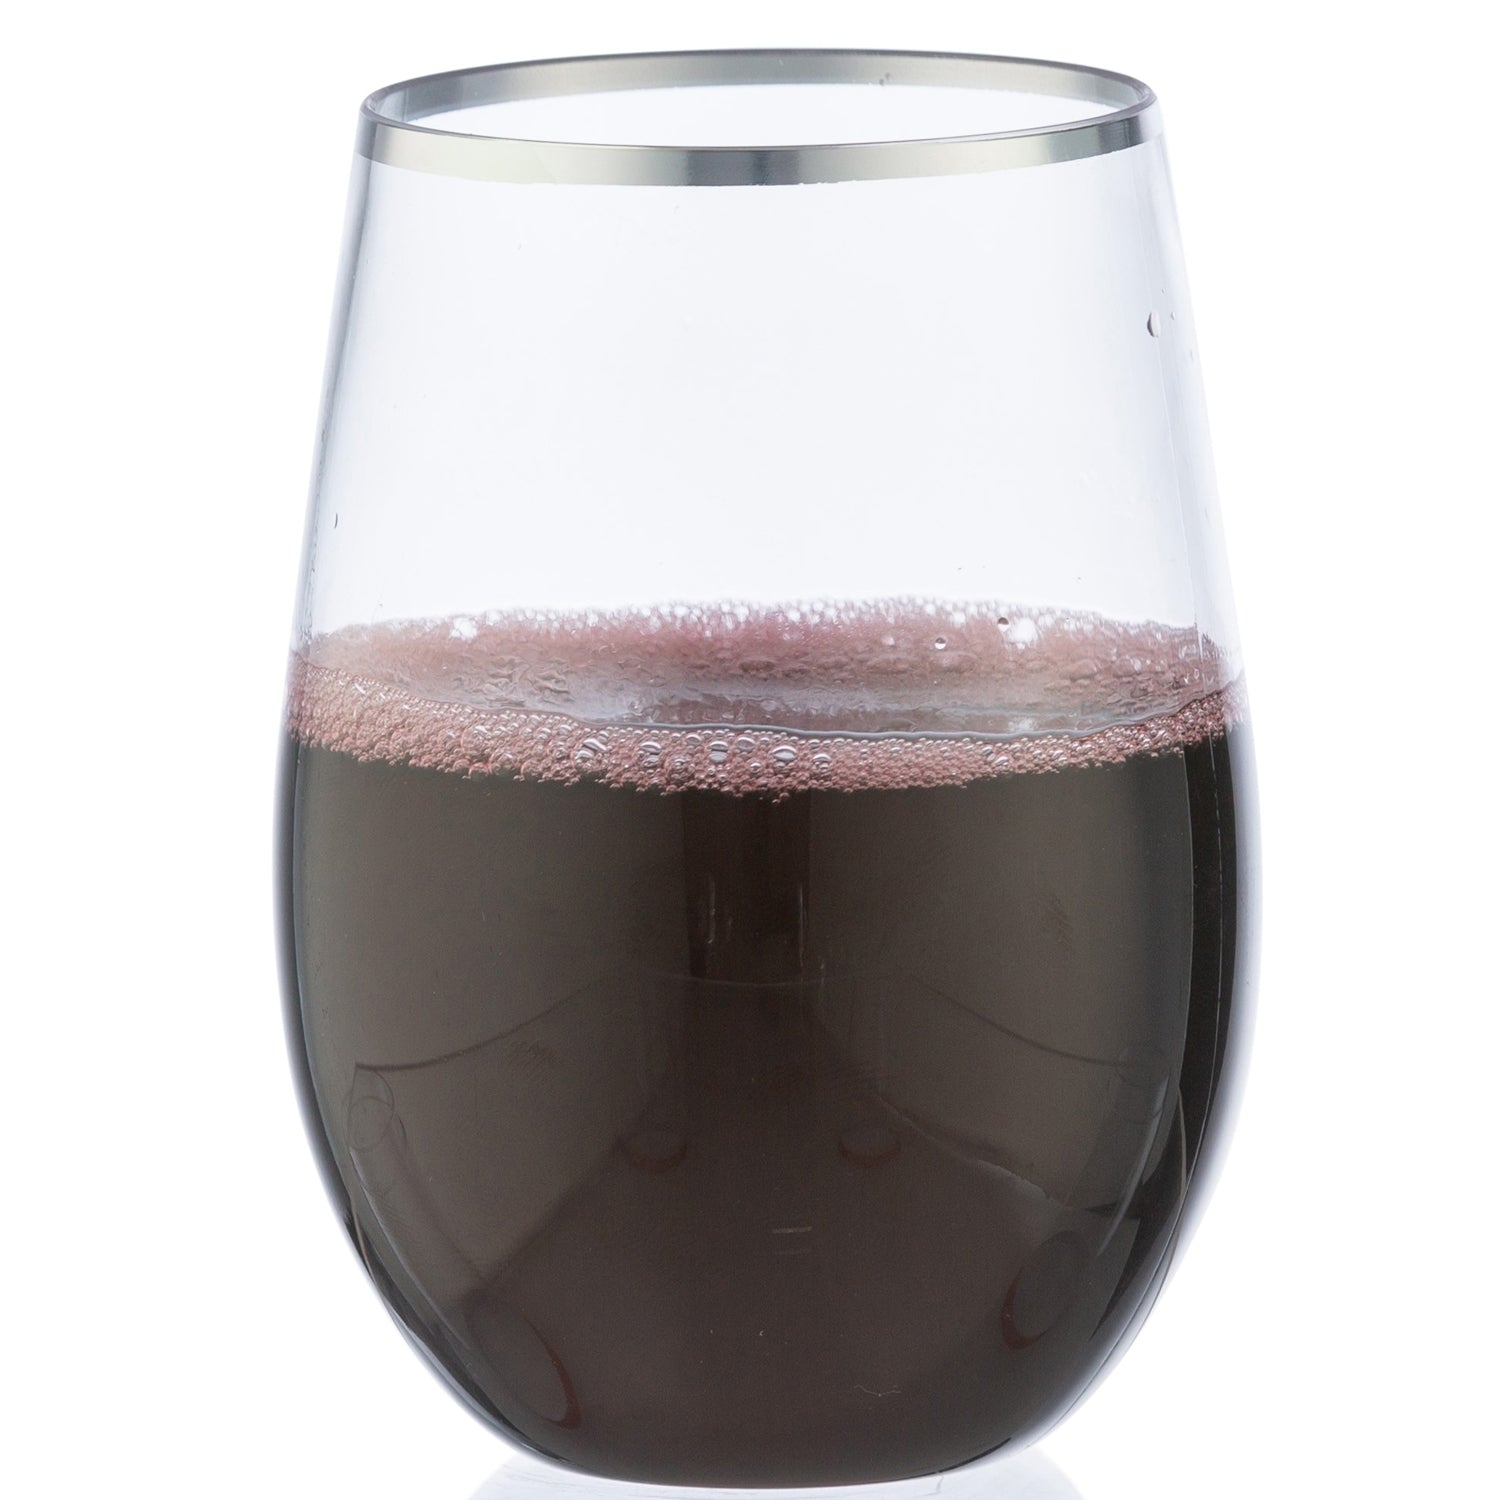 Silver Rim Stemless Plastic Wine Glasses Goblet 16 oz Cups Decorline   